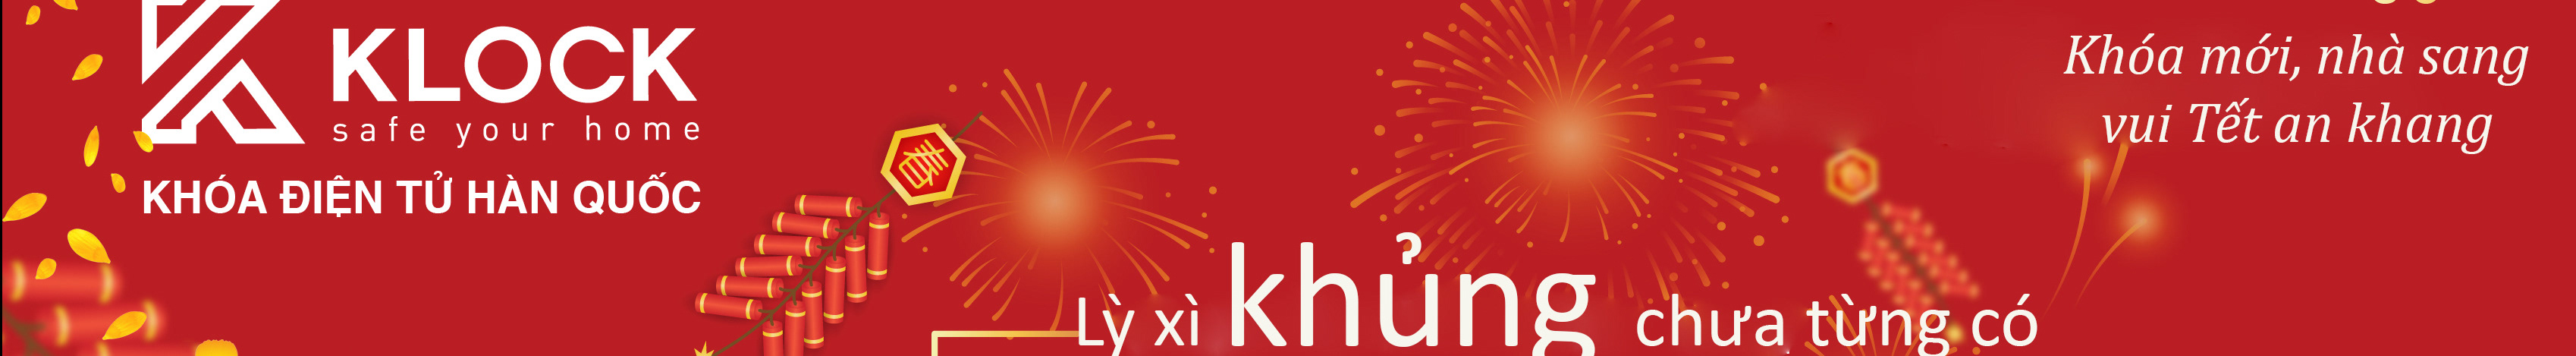 klock vietnam's profile banner